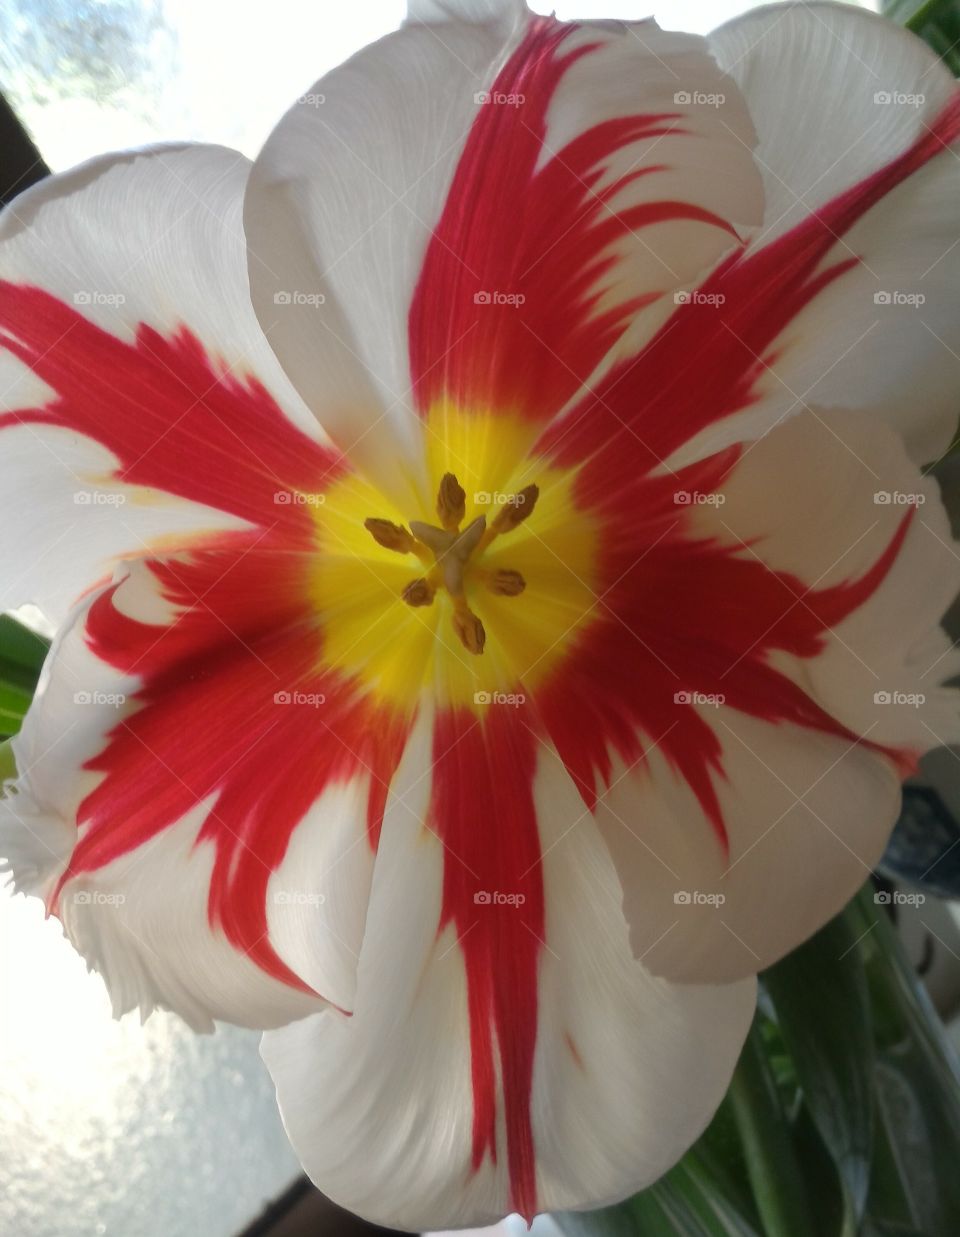 Red white and yellow tulip.